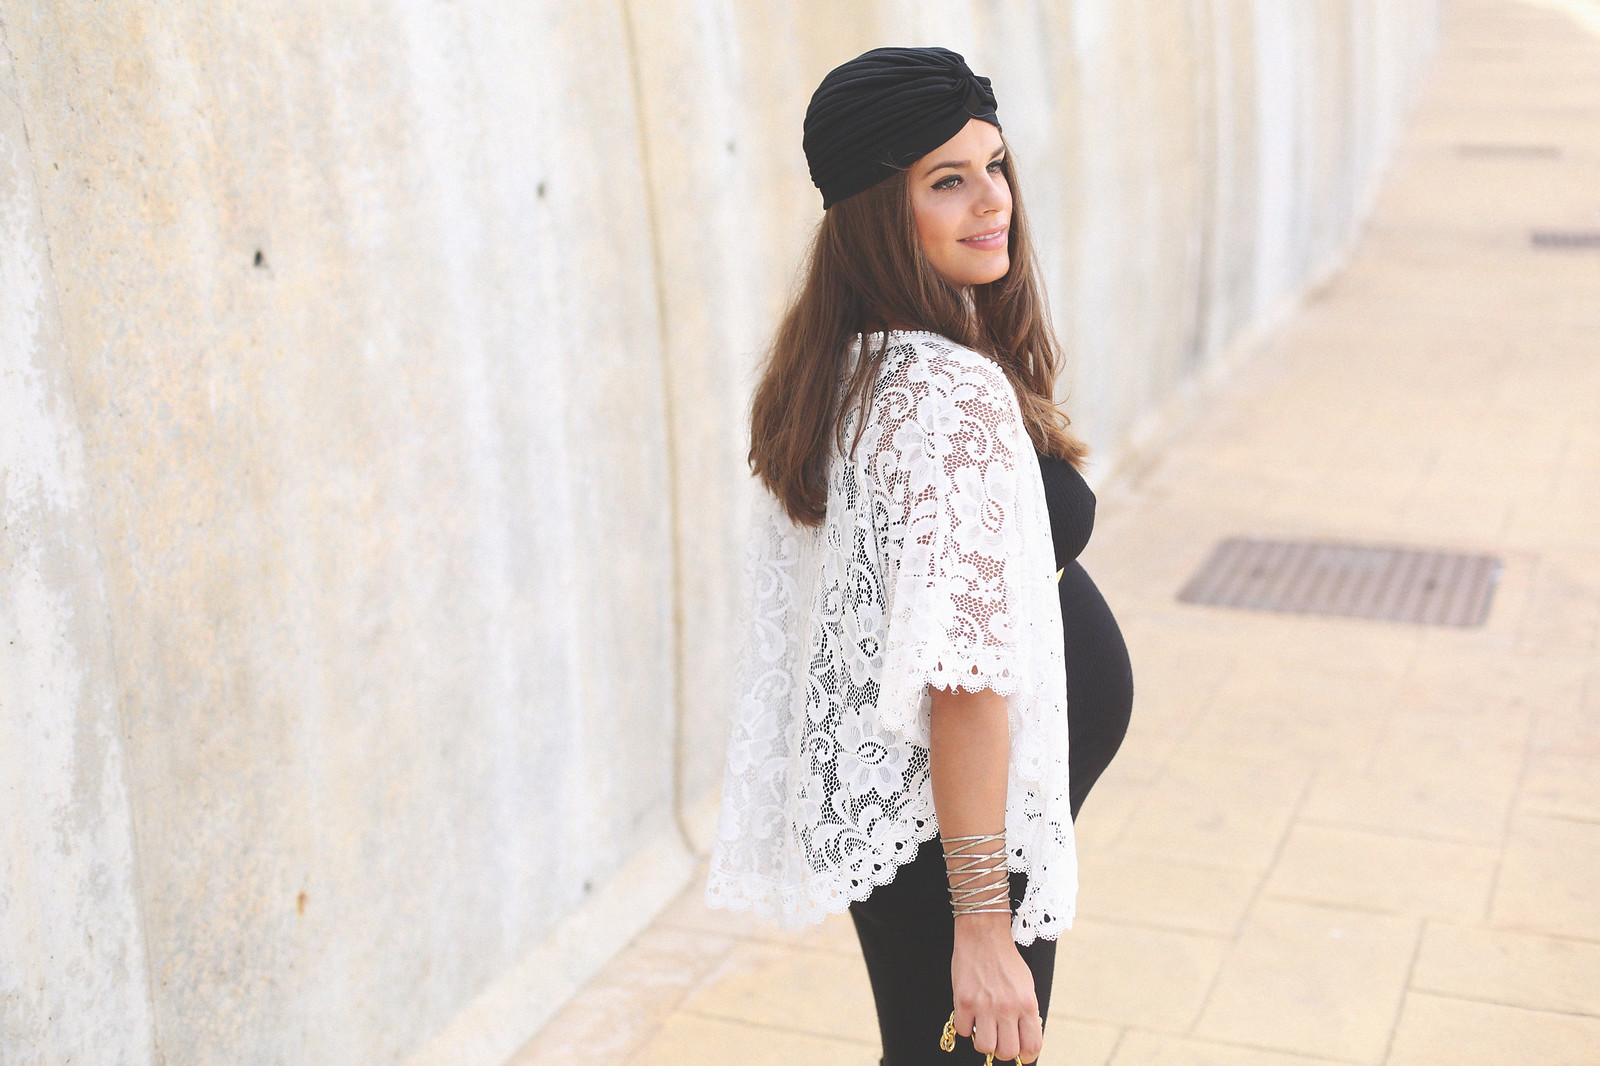 6. long black dress lace top jacket boho chic outfit - jessie chanes - pregnancy